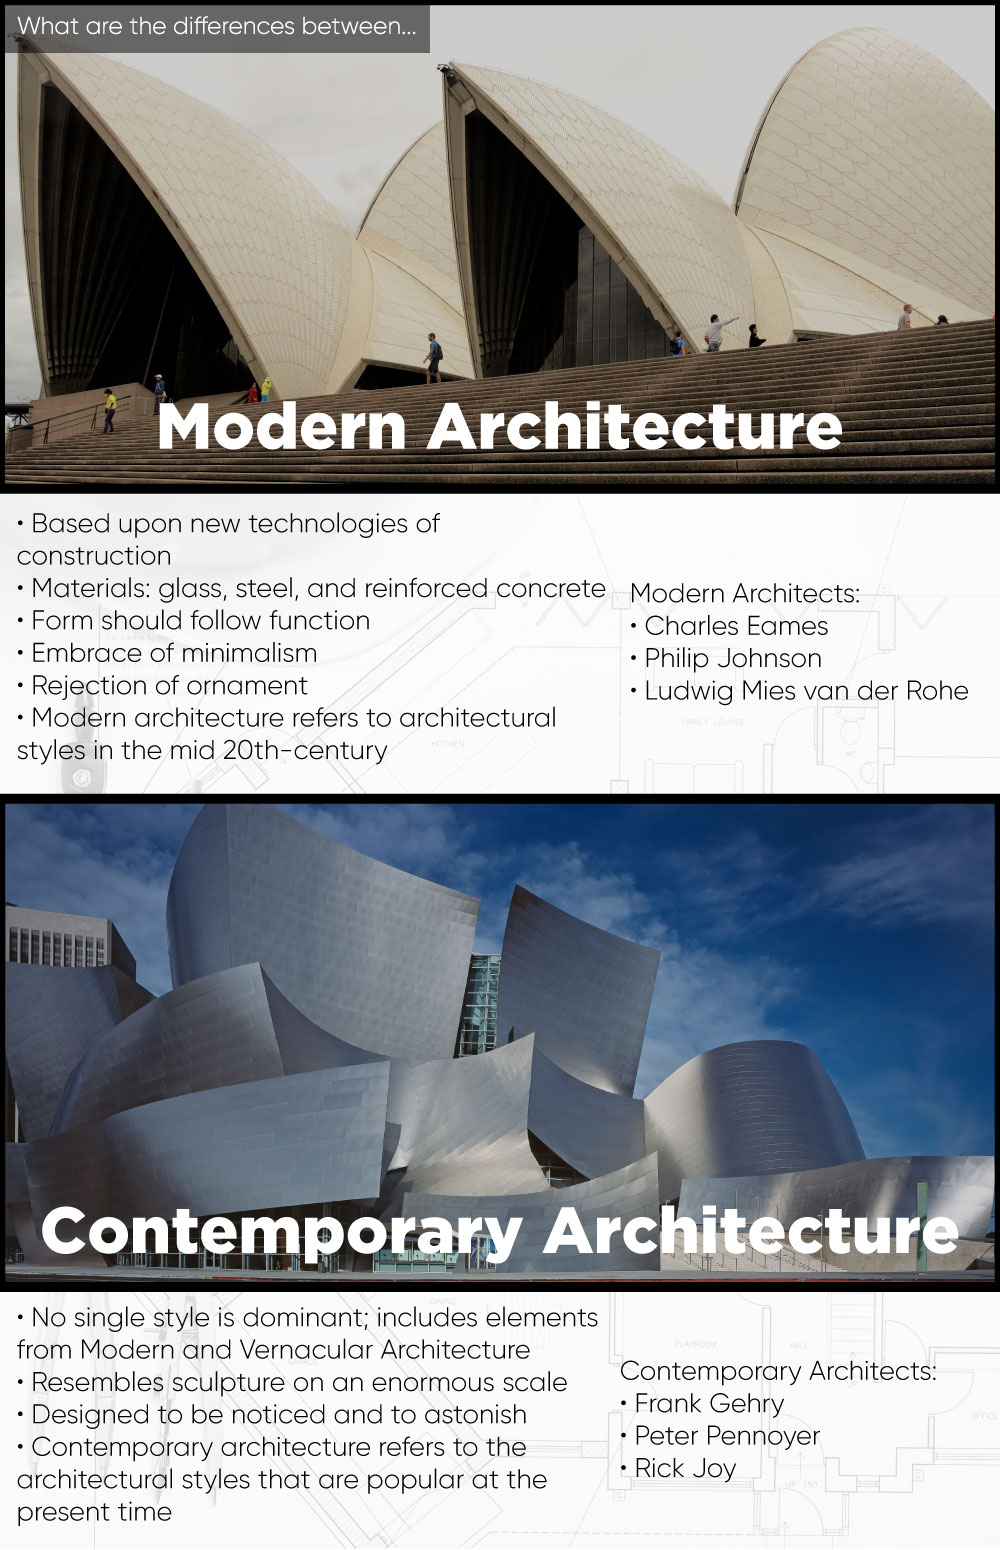 https://developmentone.net/wp-content/uploads/2019/07/contemporary-architecture-comparison.jpg